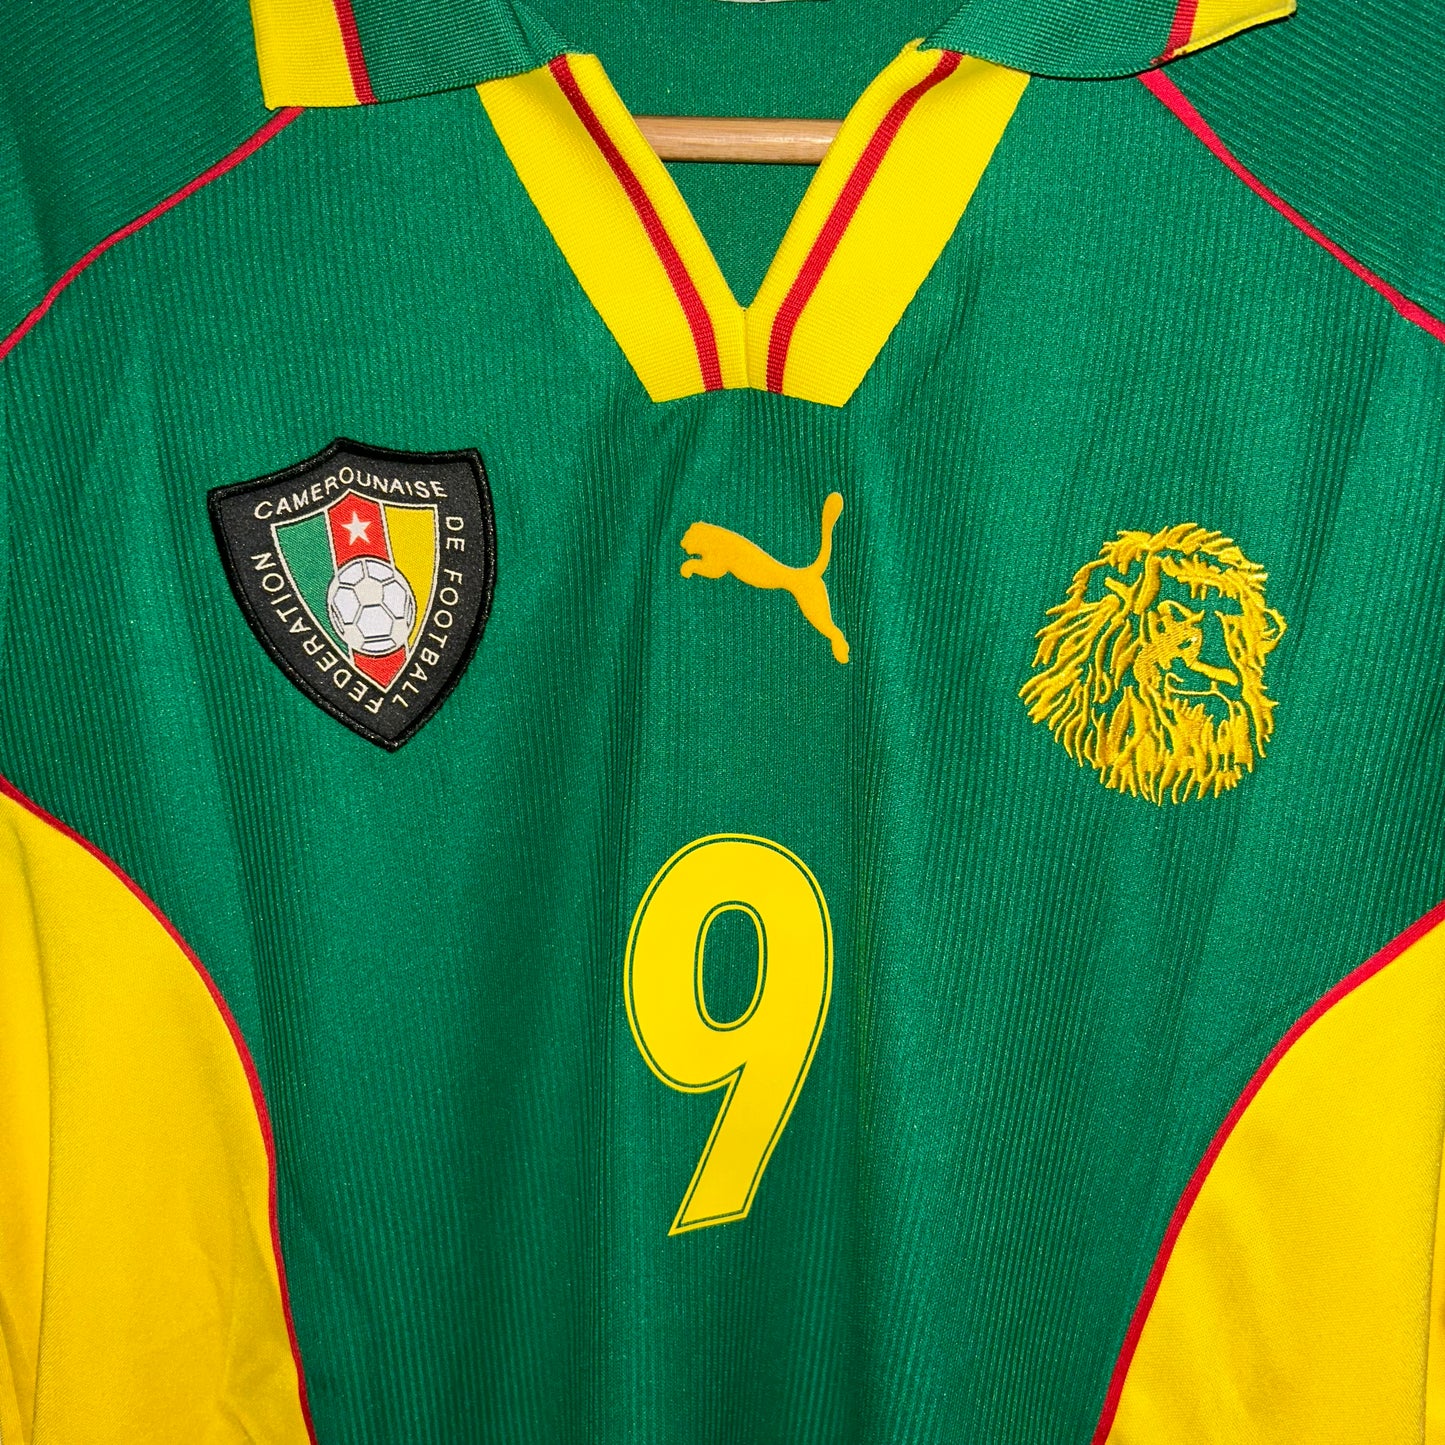 Cameroon 1998/99 Home shirt